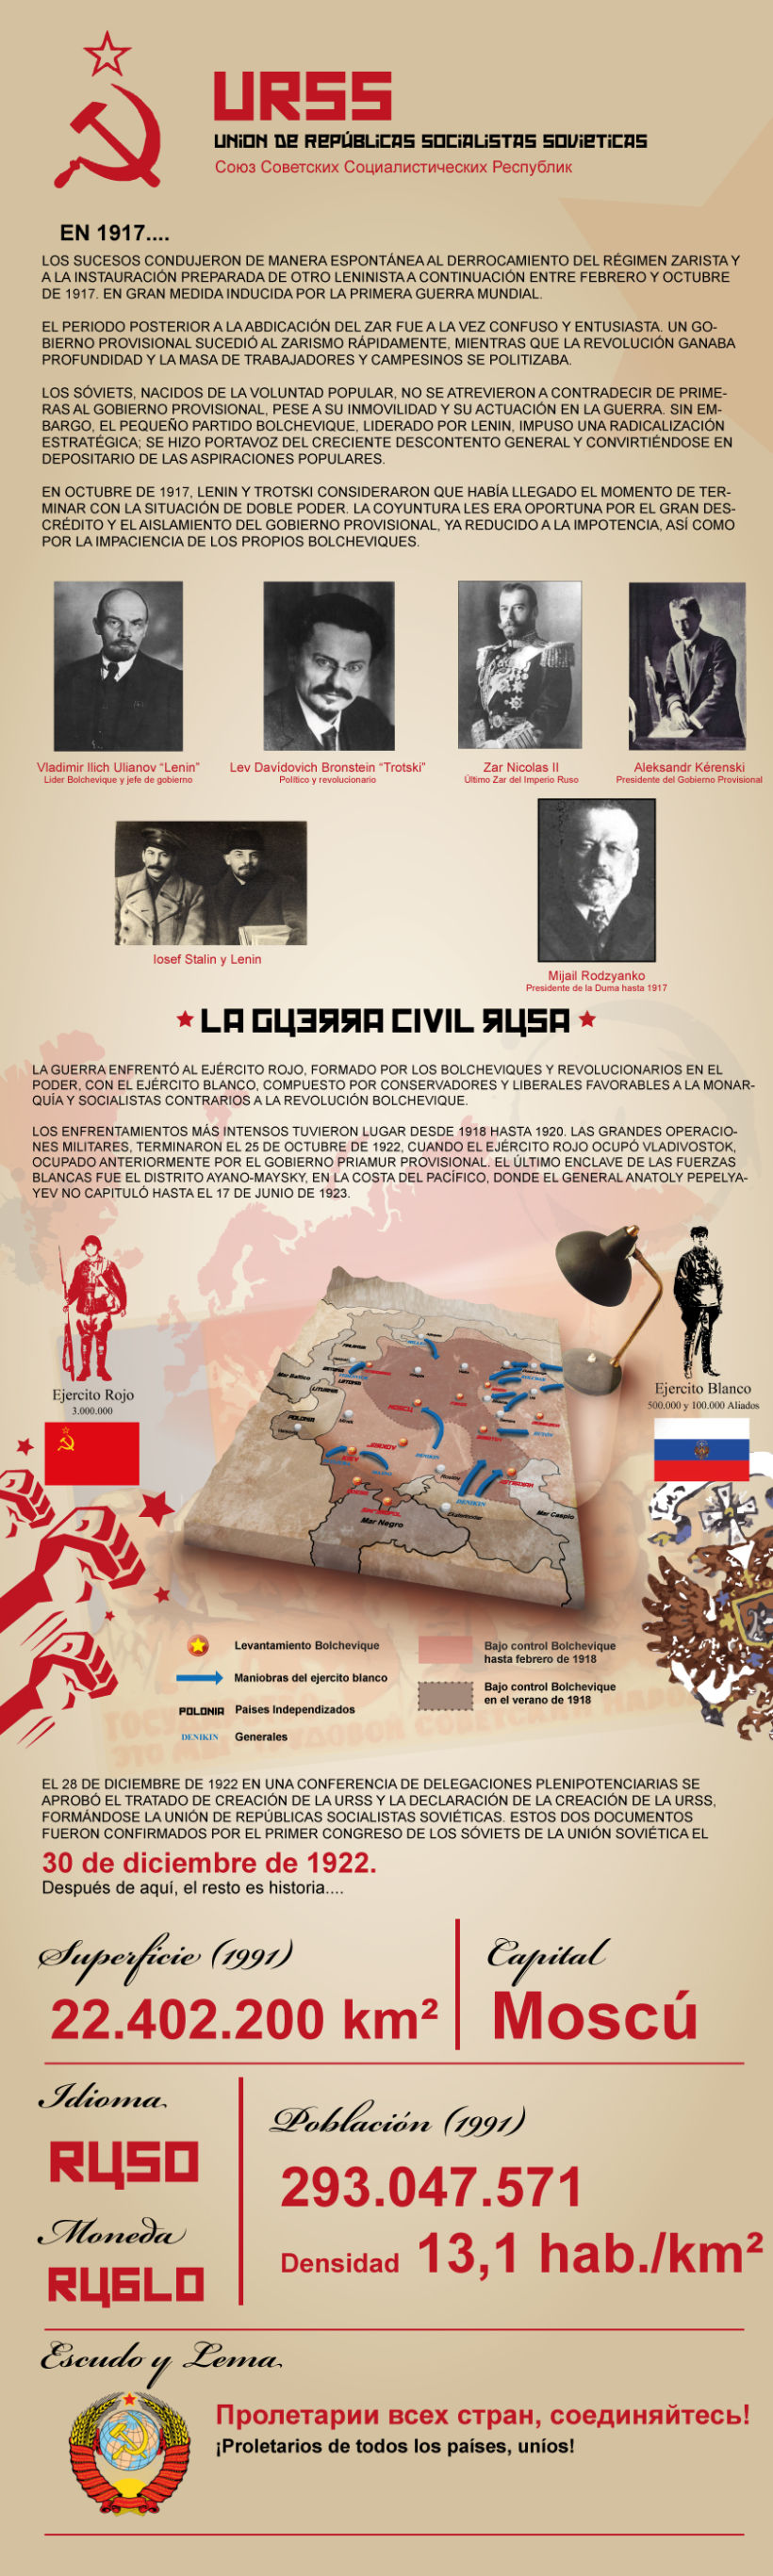 Infografía URSS -1